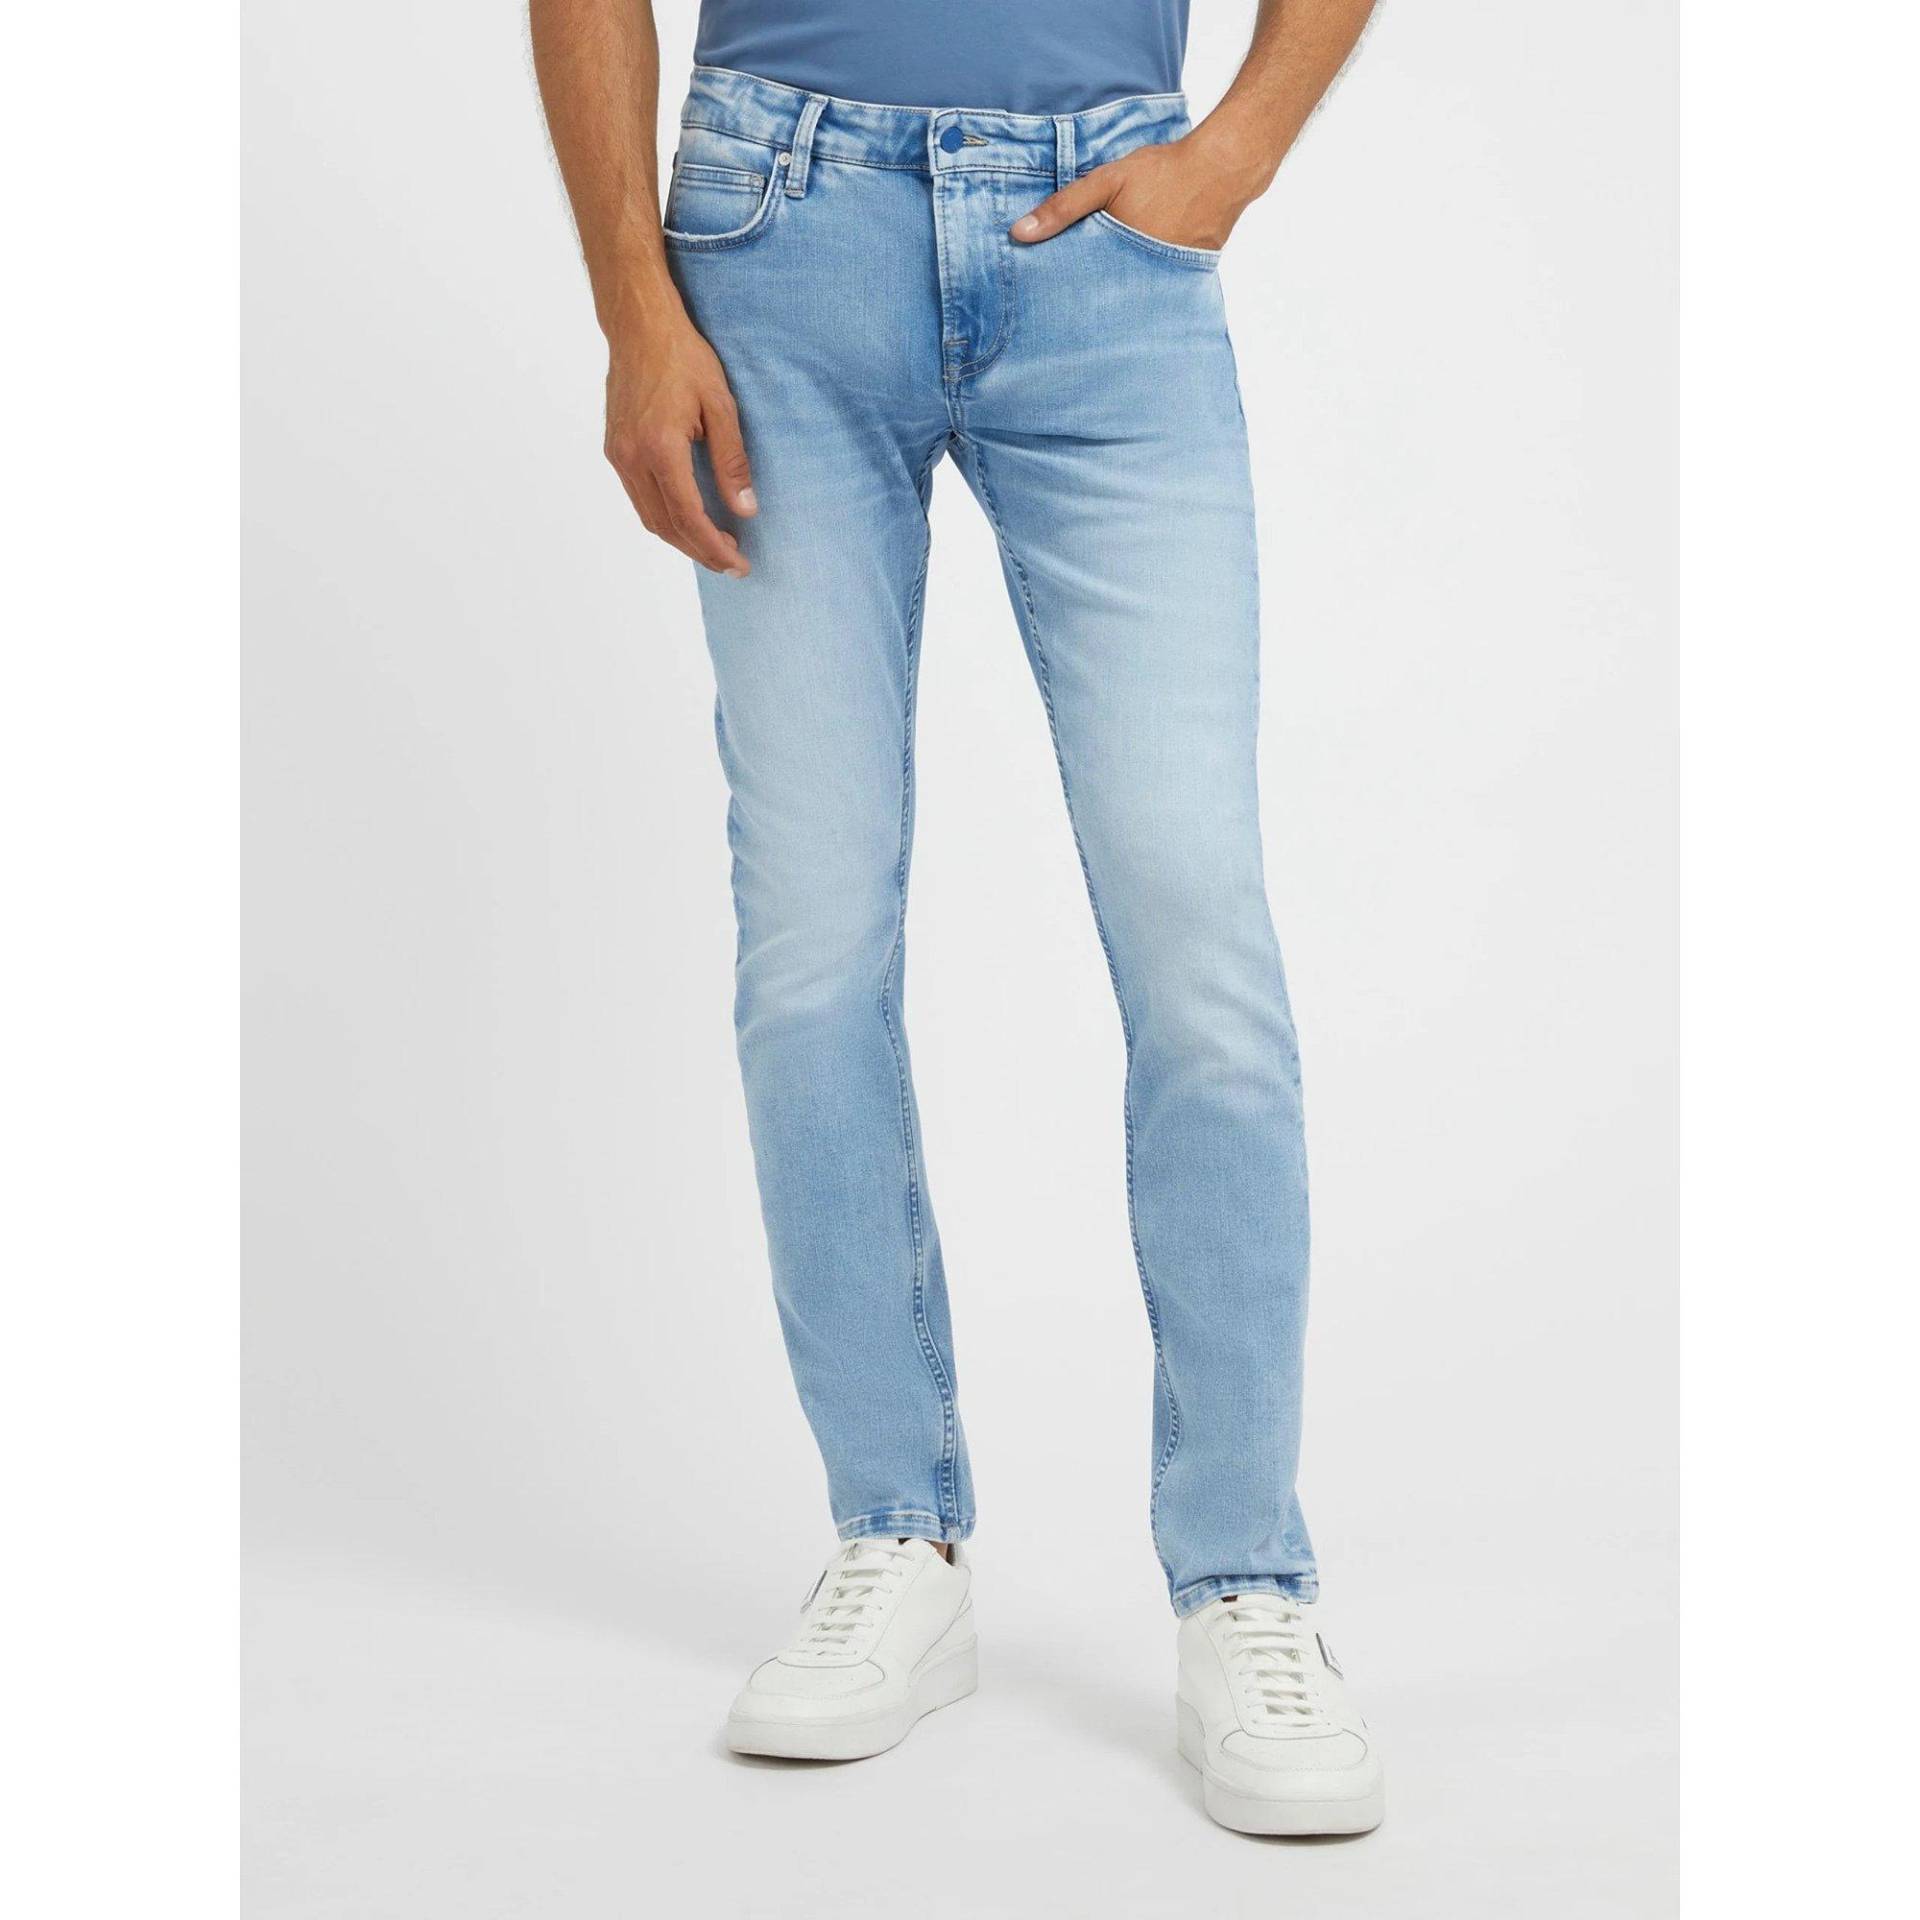 Jeans, Skinny Fit Herren Hellblau W30 von GUESS